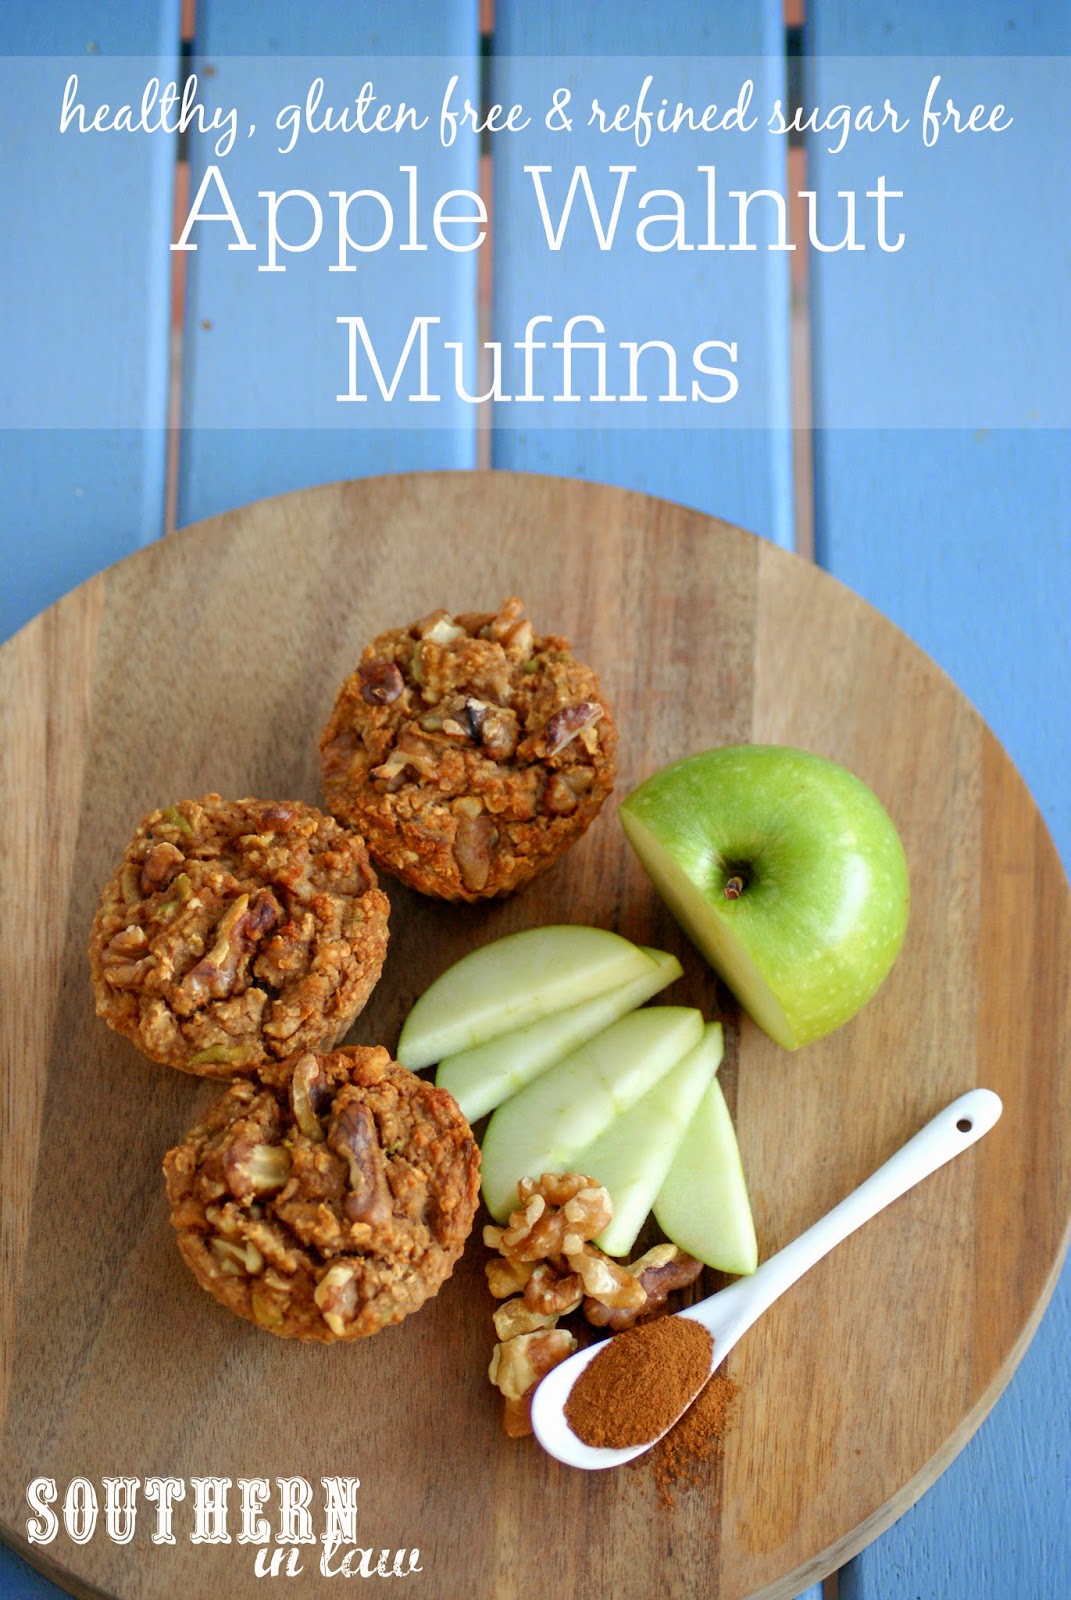 Healthy Apple Walnut Muffins Recipe - healthy, gluten free, refined sugar free and freezer friendly muffin recipe